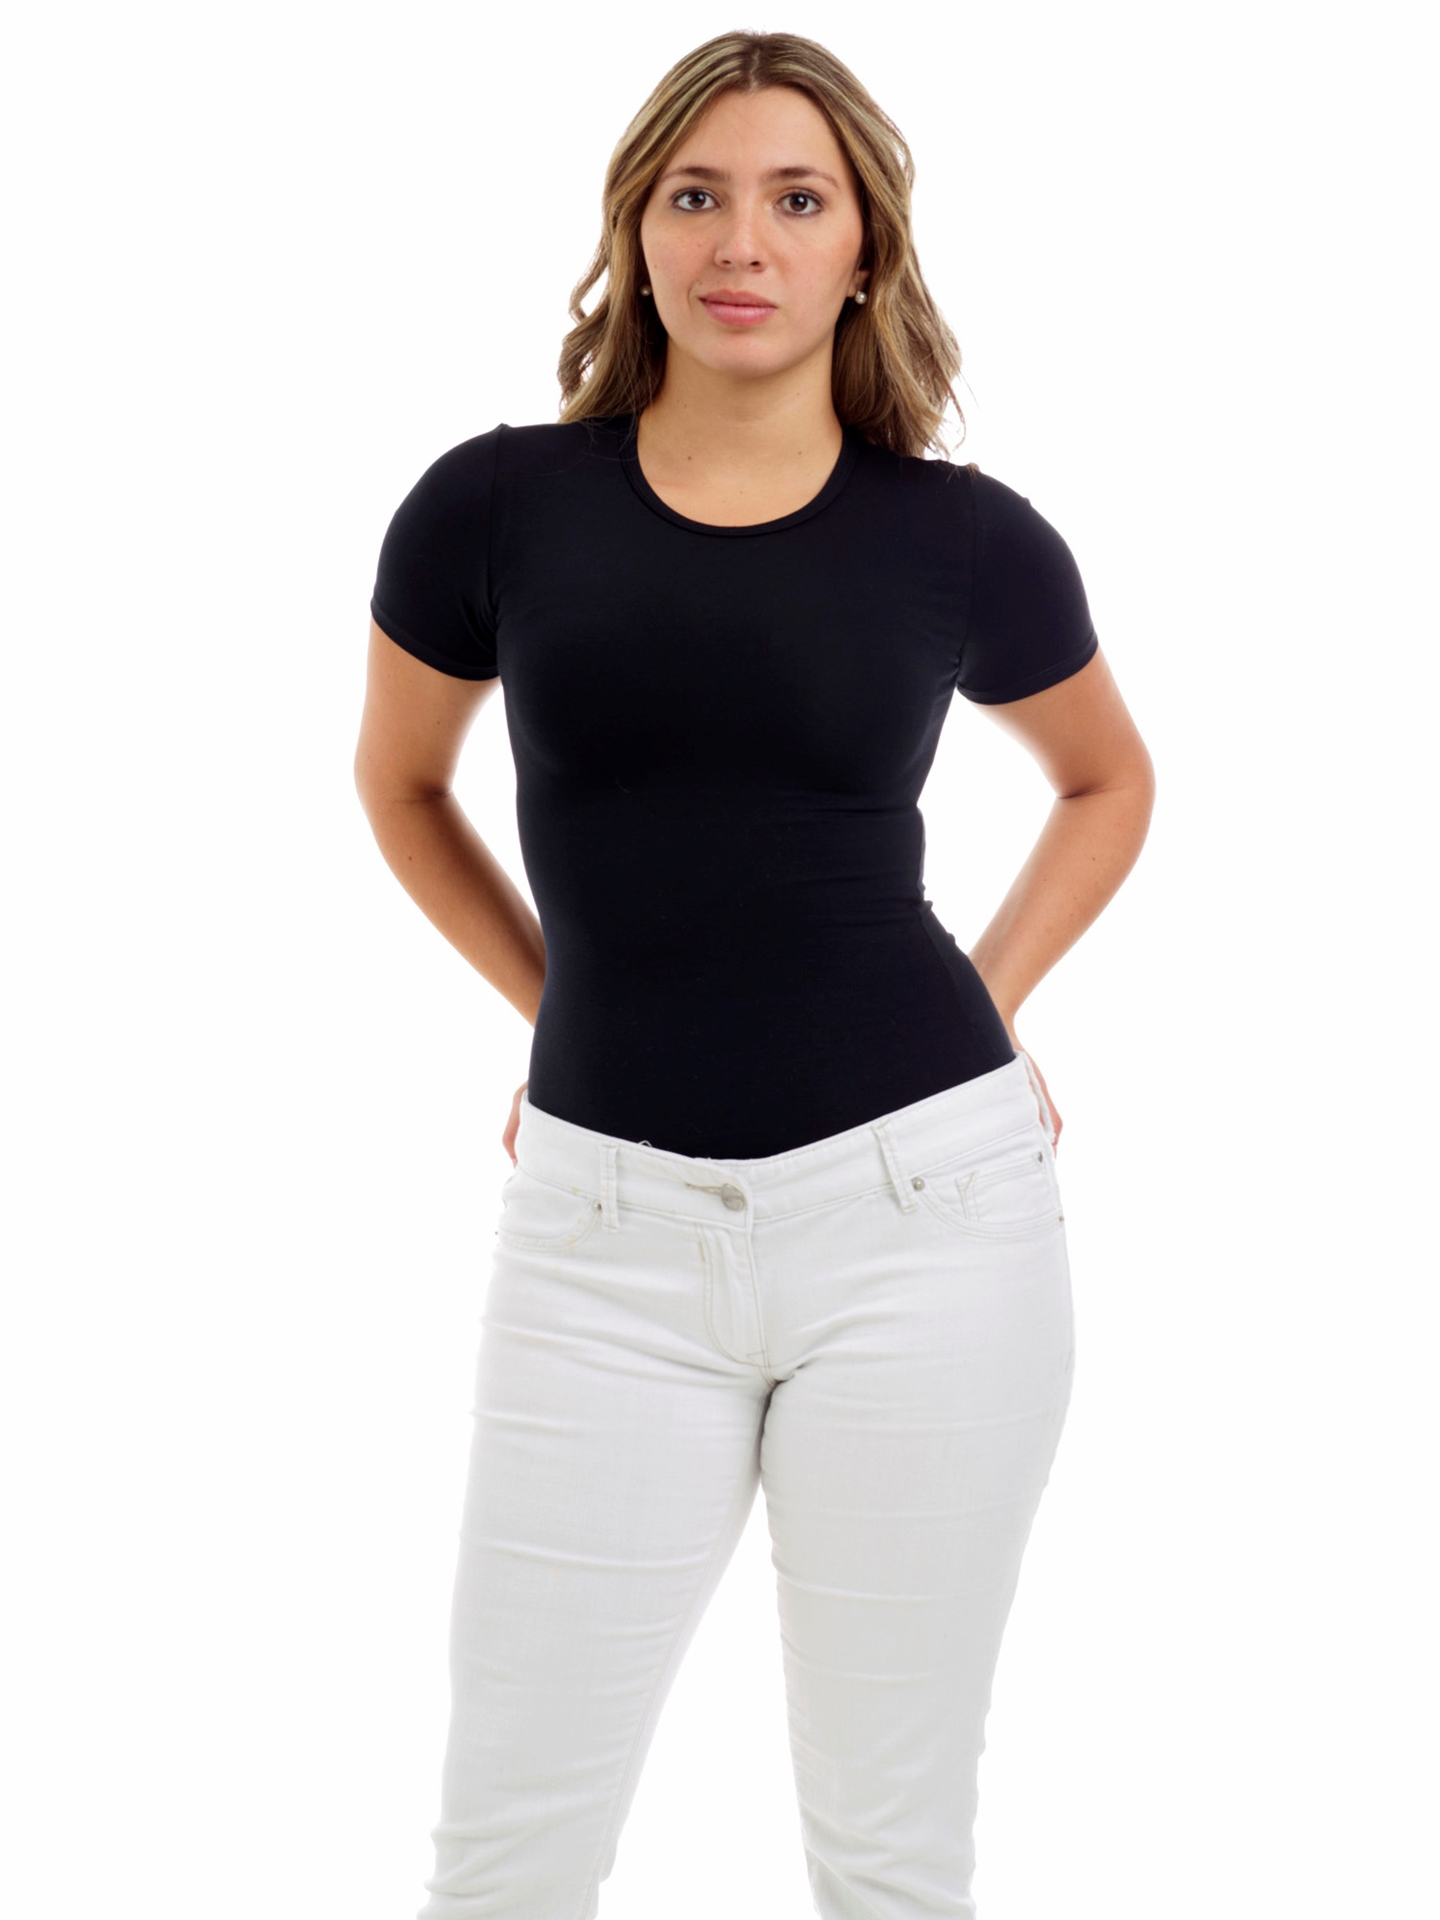 Women's Ultra Light Cotton Spandex Compression Tank. Men Compression Shirts,  Girdles, Chest Binders, Hernia Garments